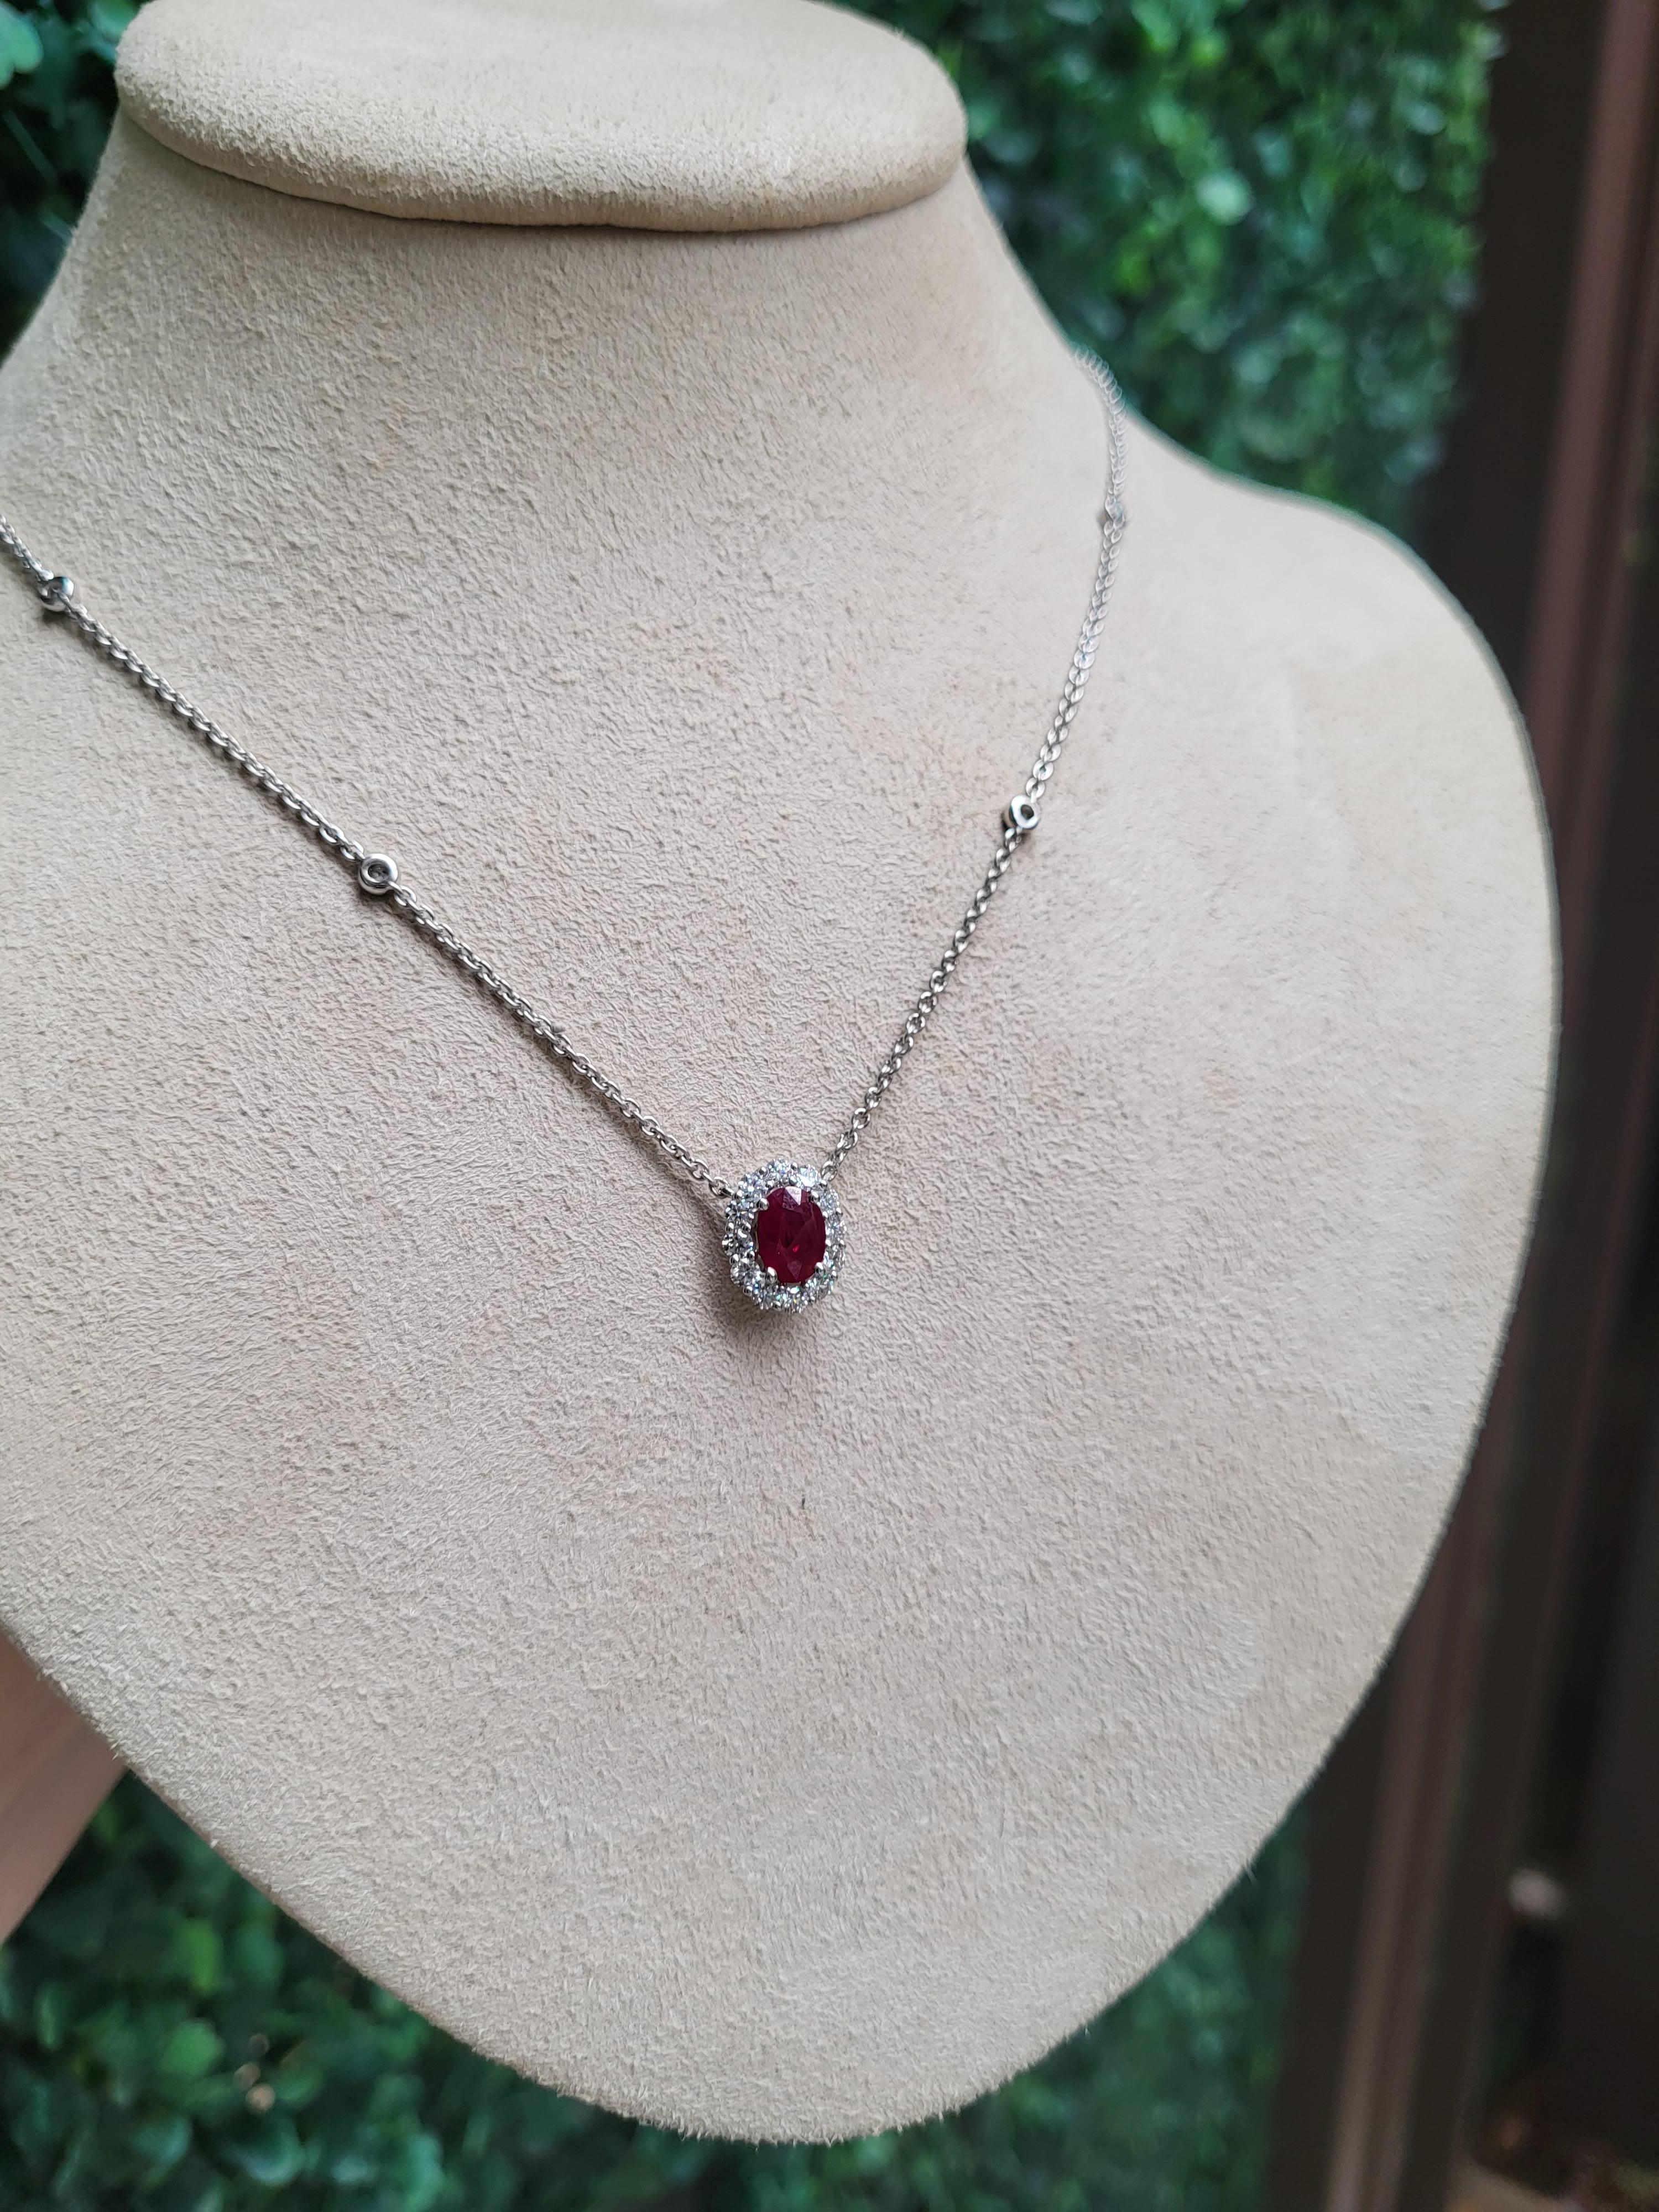 0.71 Carat Oval Cut Natural Ruby & Diamond Pendant Necklace, 18 Karat White Gold For Sale 3